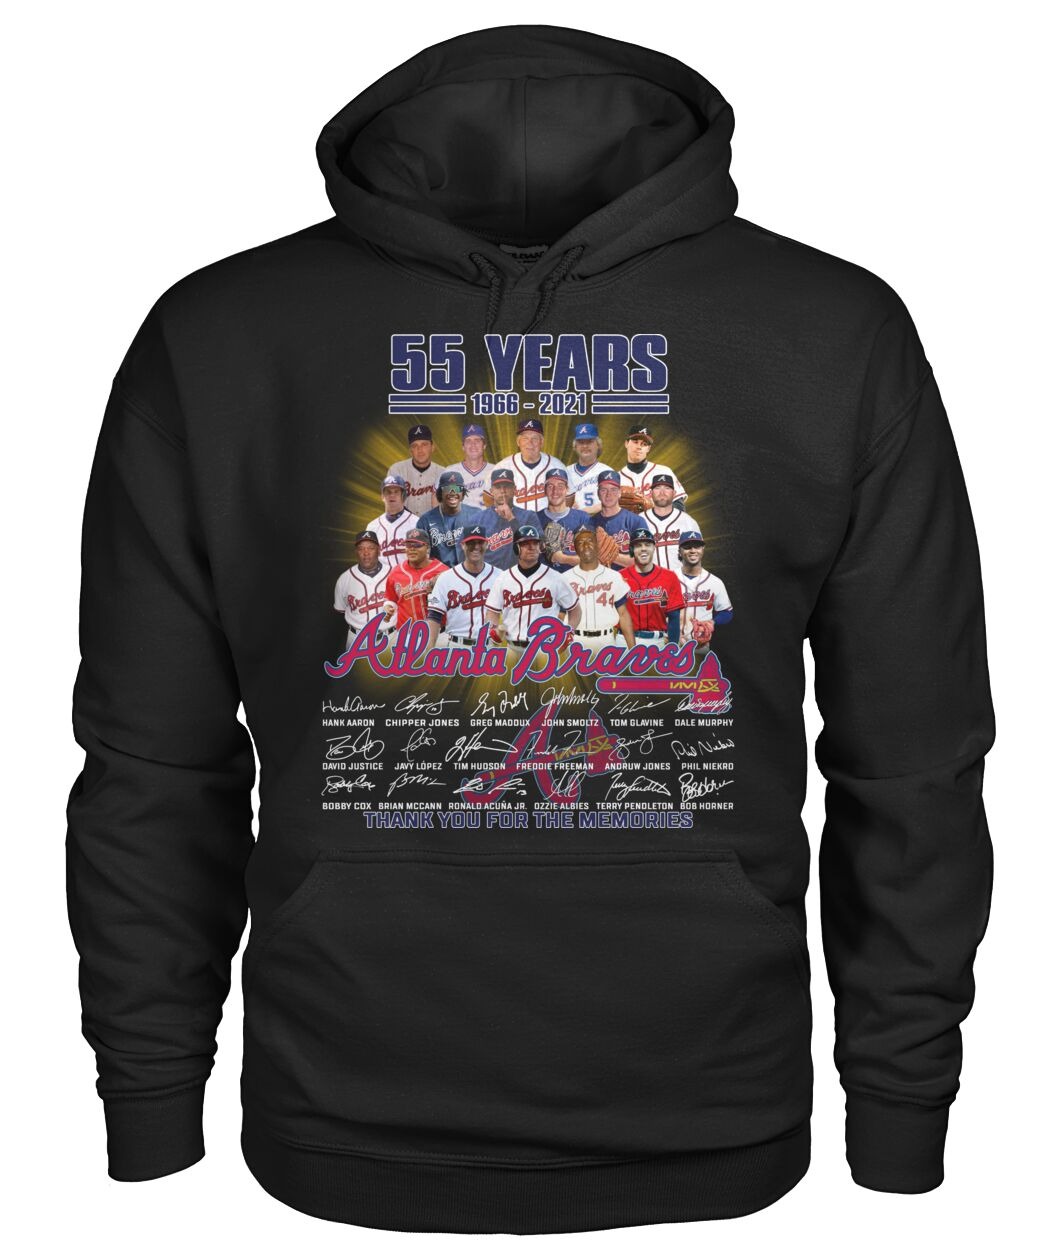 Atlanta Braves MLB 55 years thank you for the memories shirt hoodie 2